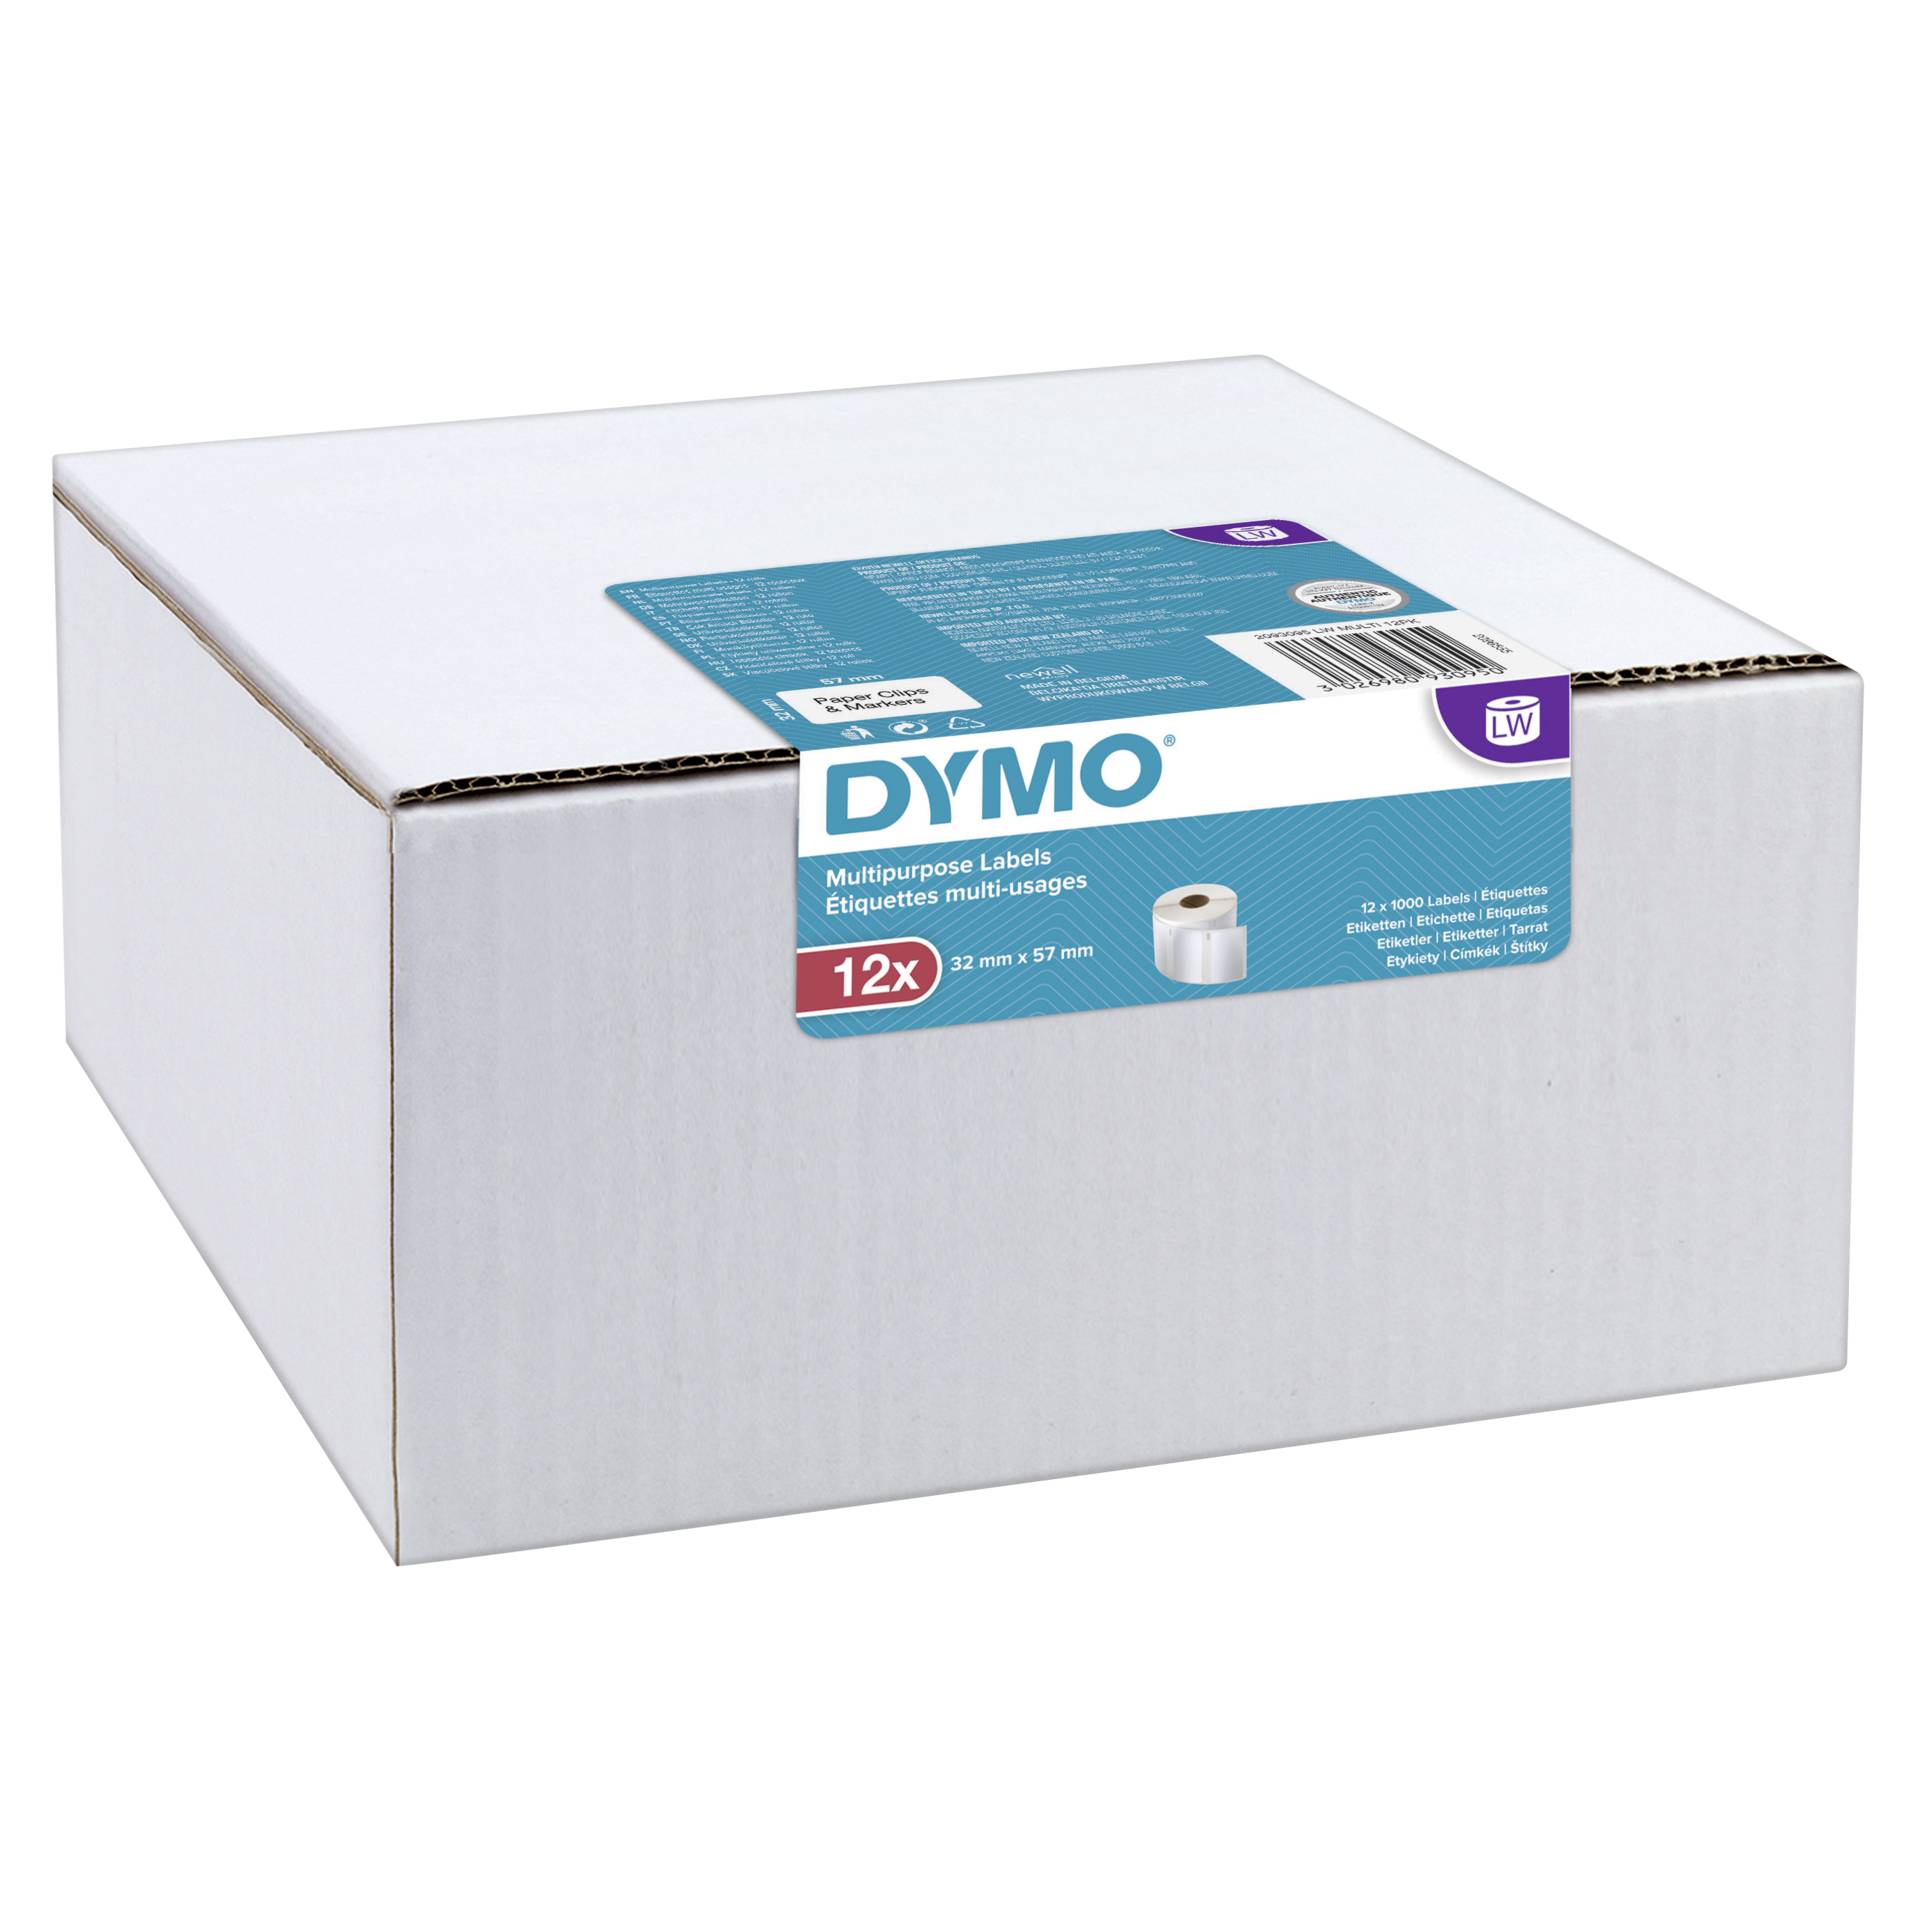 Dymo etichette multiuso 32 x 57 mm bianco 12x 1000 pz.